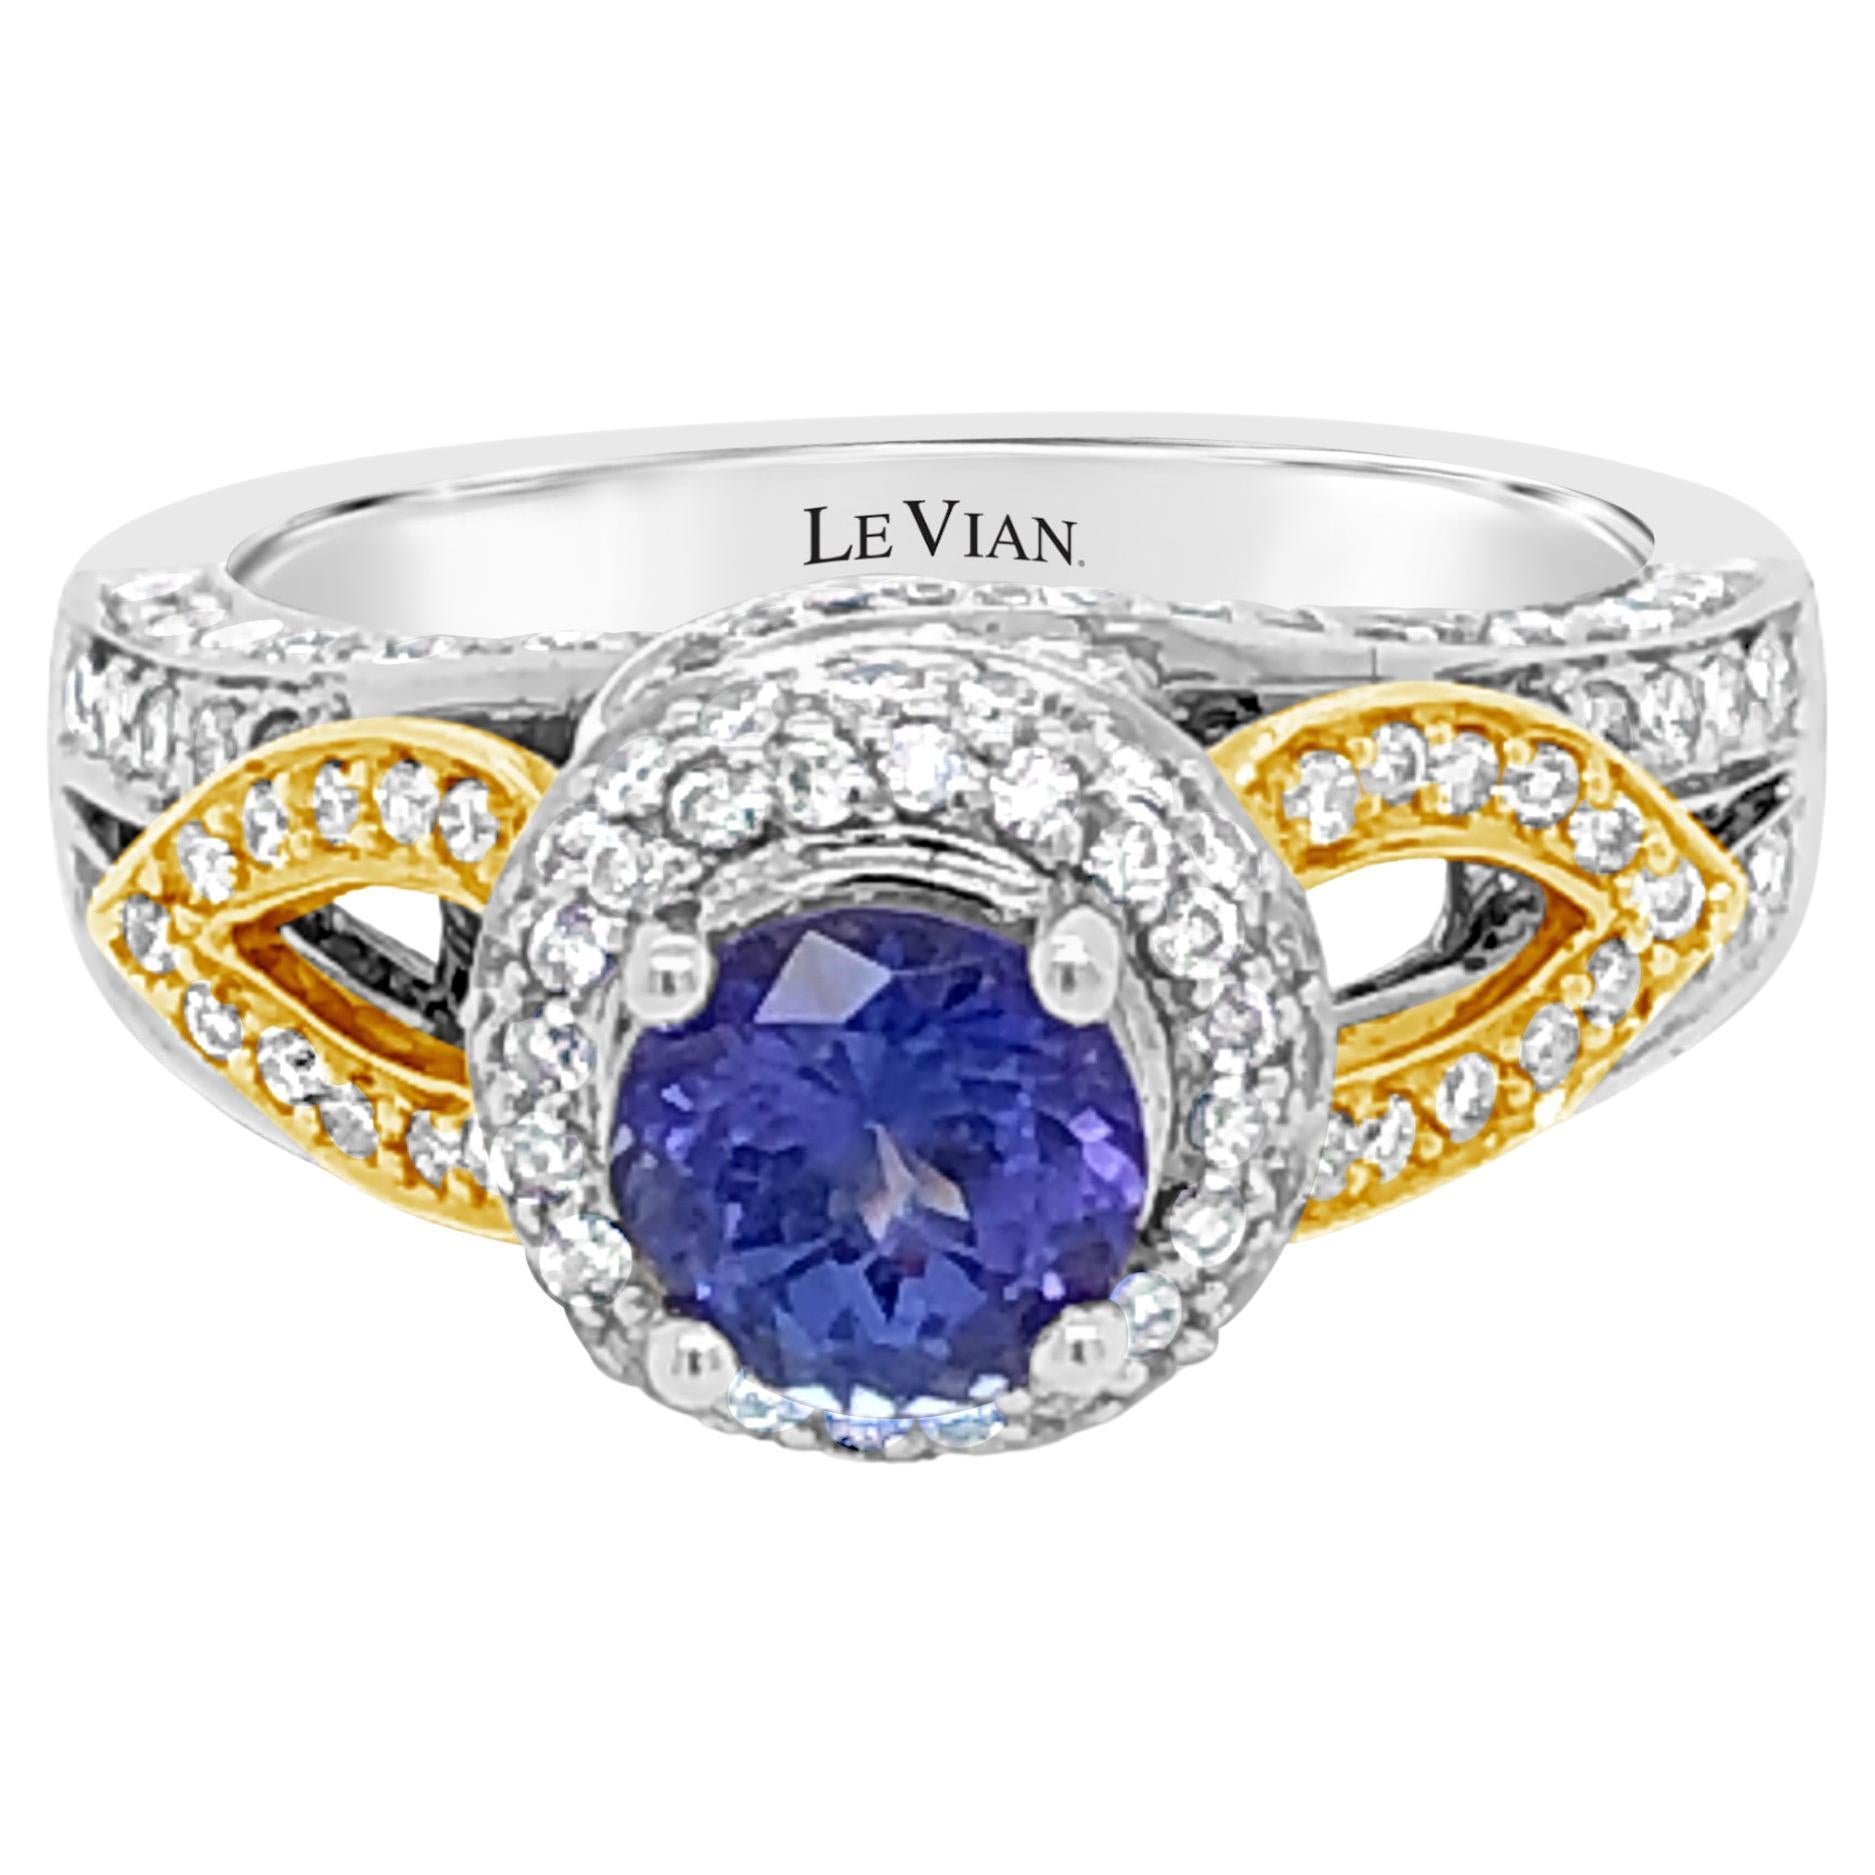 Levian Blue Tanzanite And Diamond Ring In 14K Multi Tone Gold Size 7